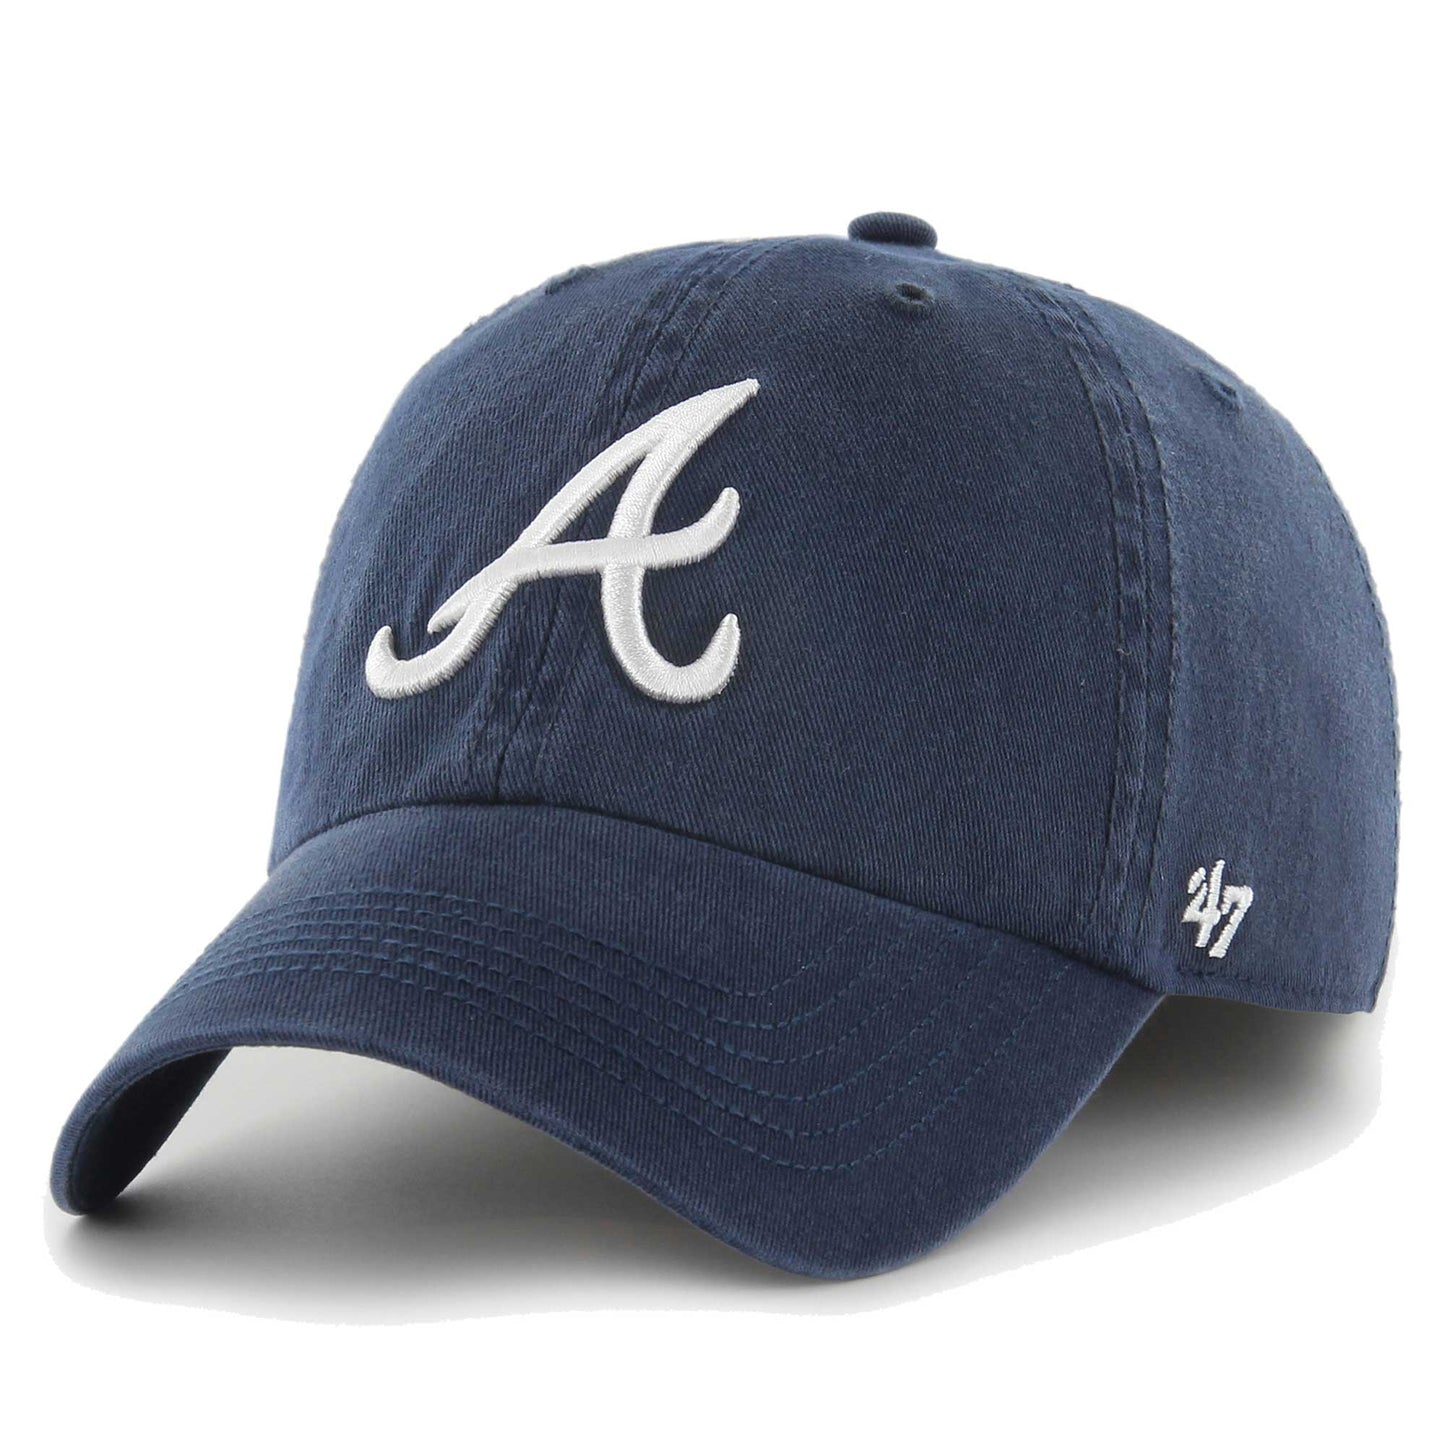 Atlanta Braves '47 Franchise Logo Fitted Hat - Navy